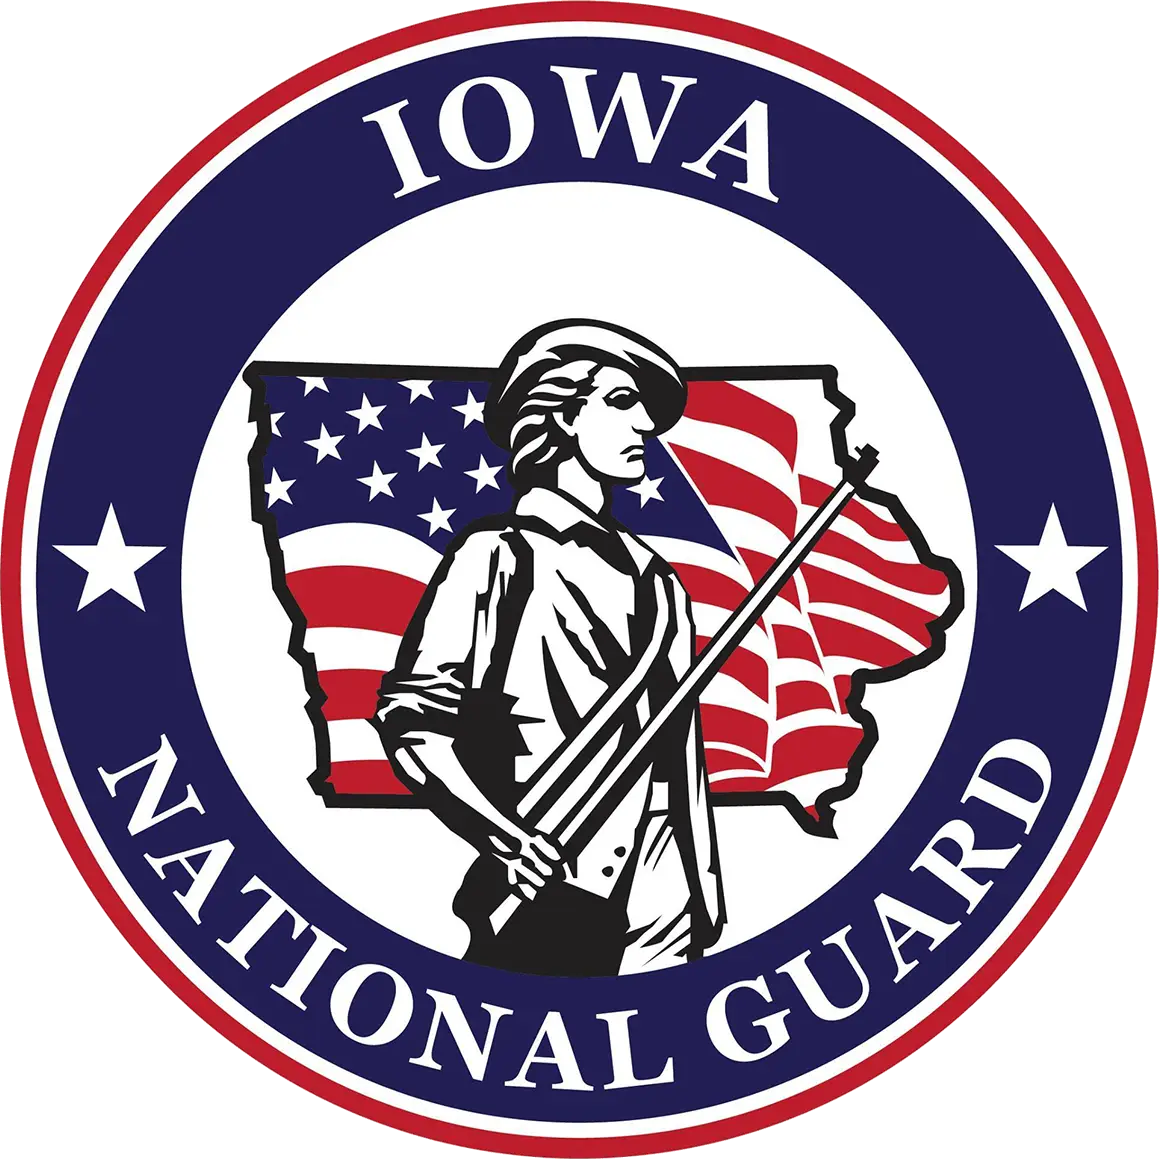 Iowa National Guard logo emblem patch decal insignia